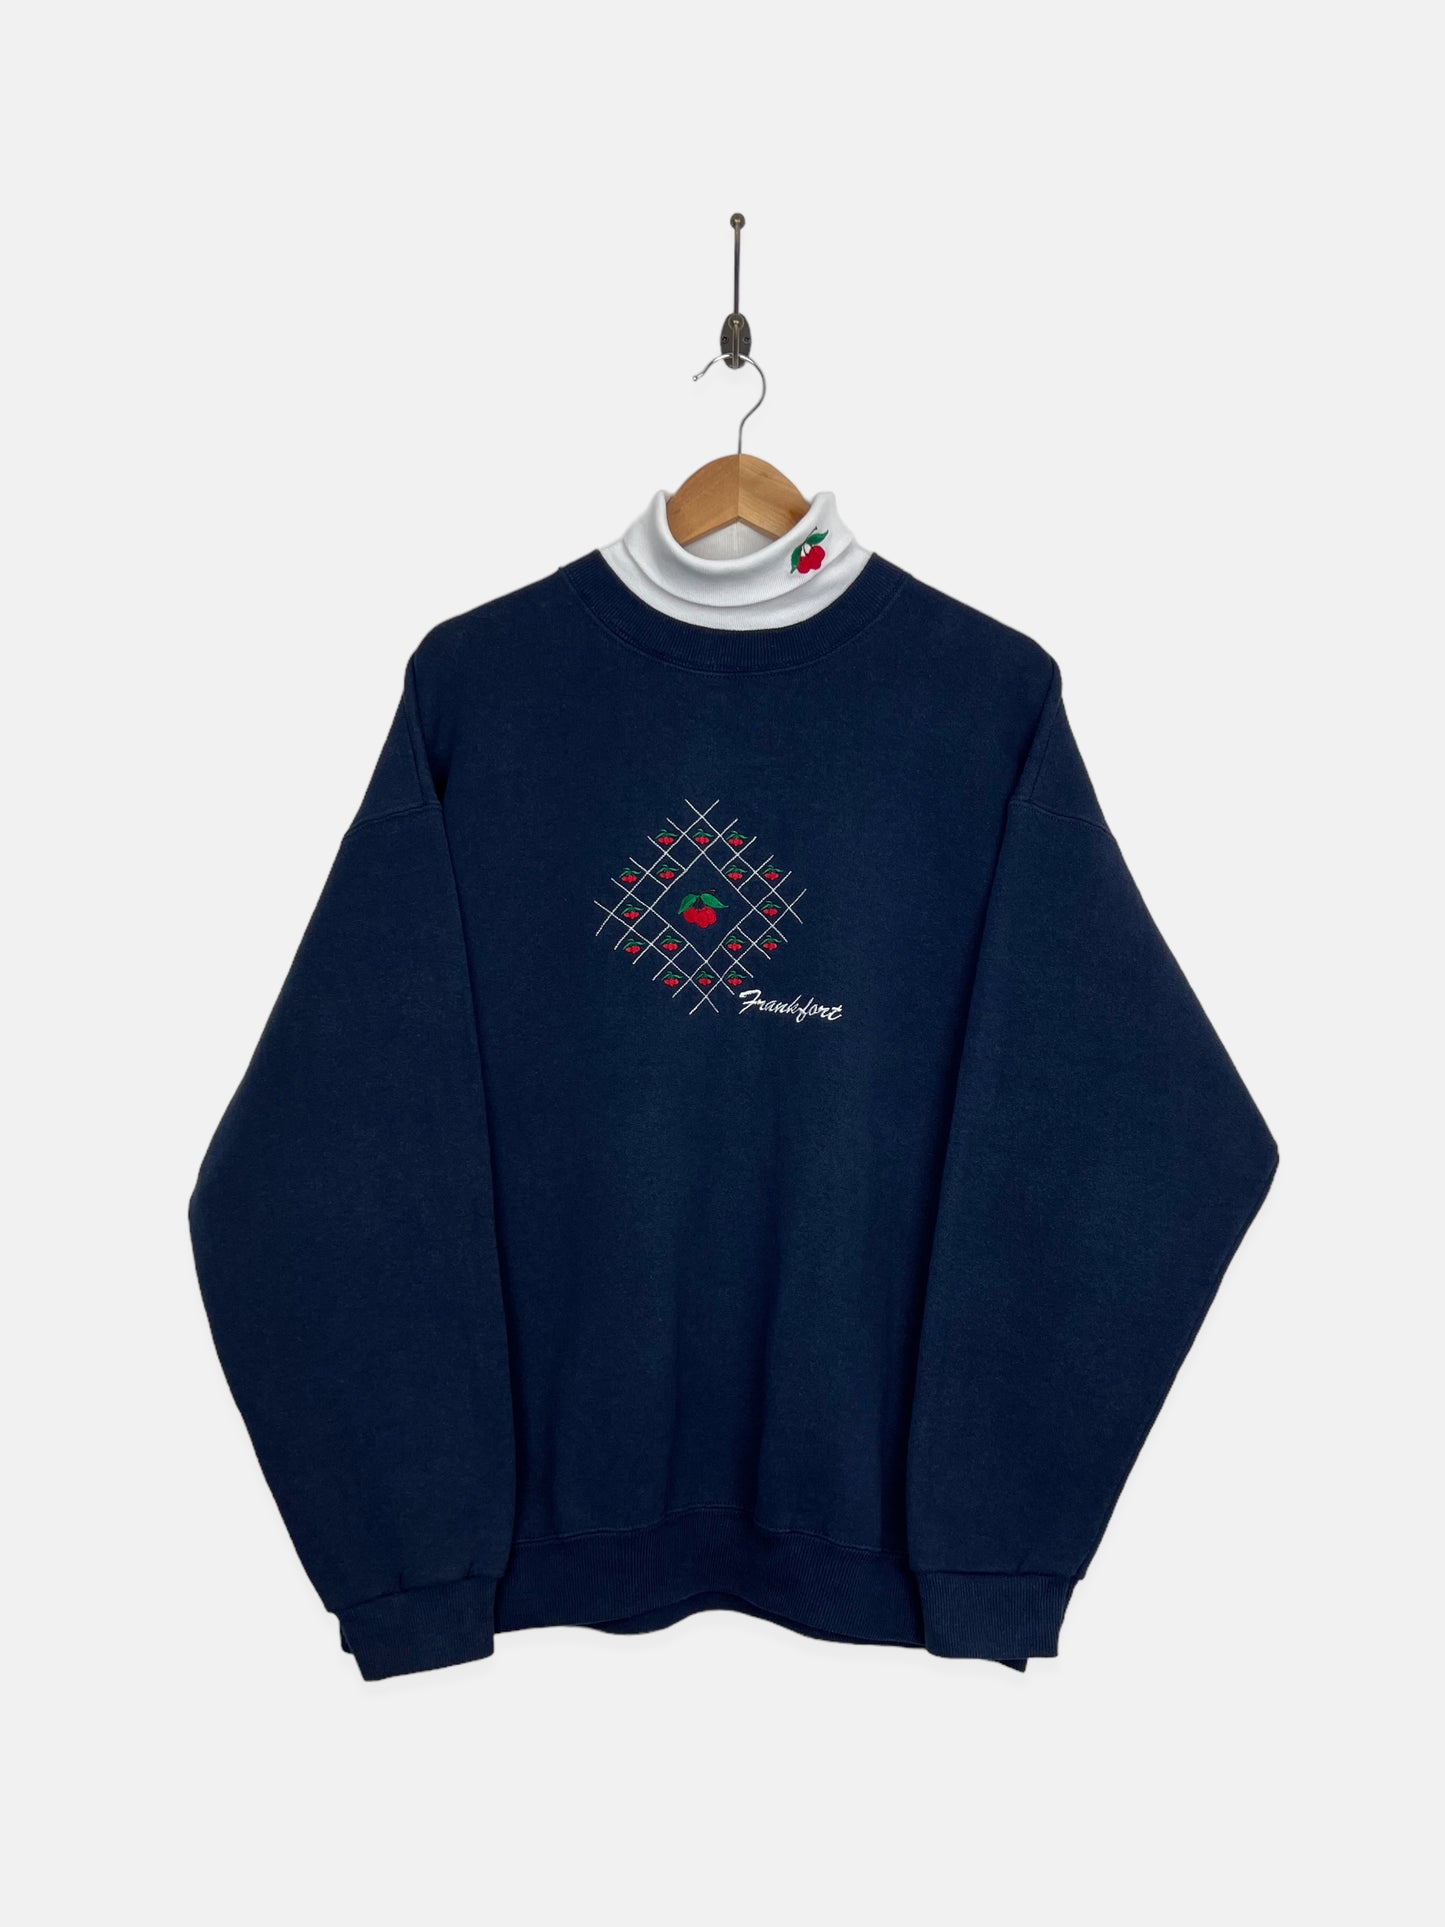 90's Frankfurt USA Made Embroidered Vintage Mock-Neck Sweatshirt Size L-XL